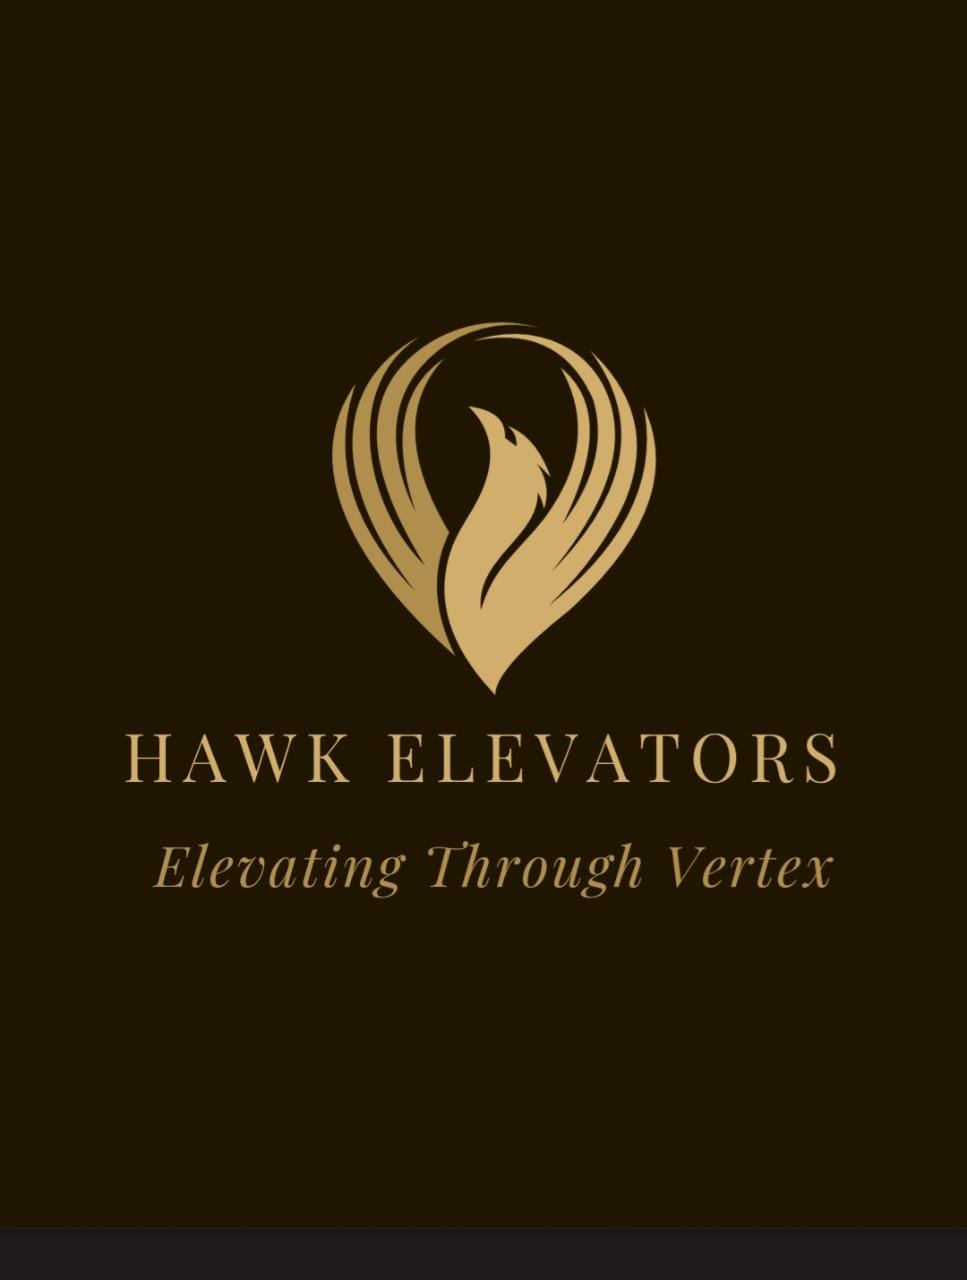 Best Elevators Company in Bangalore